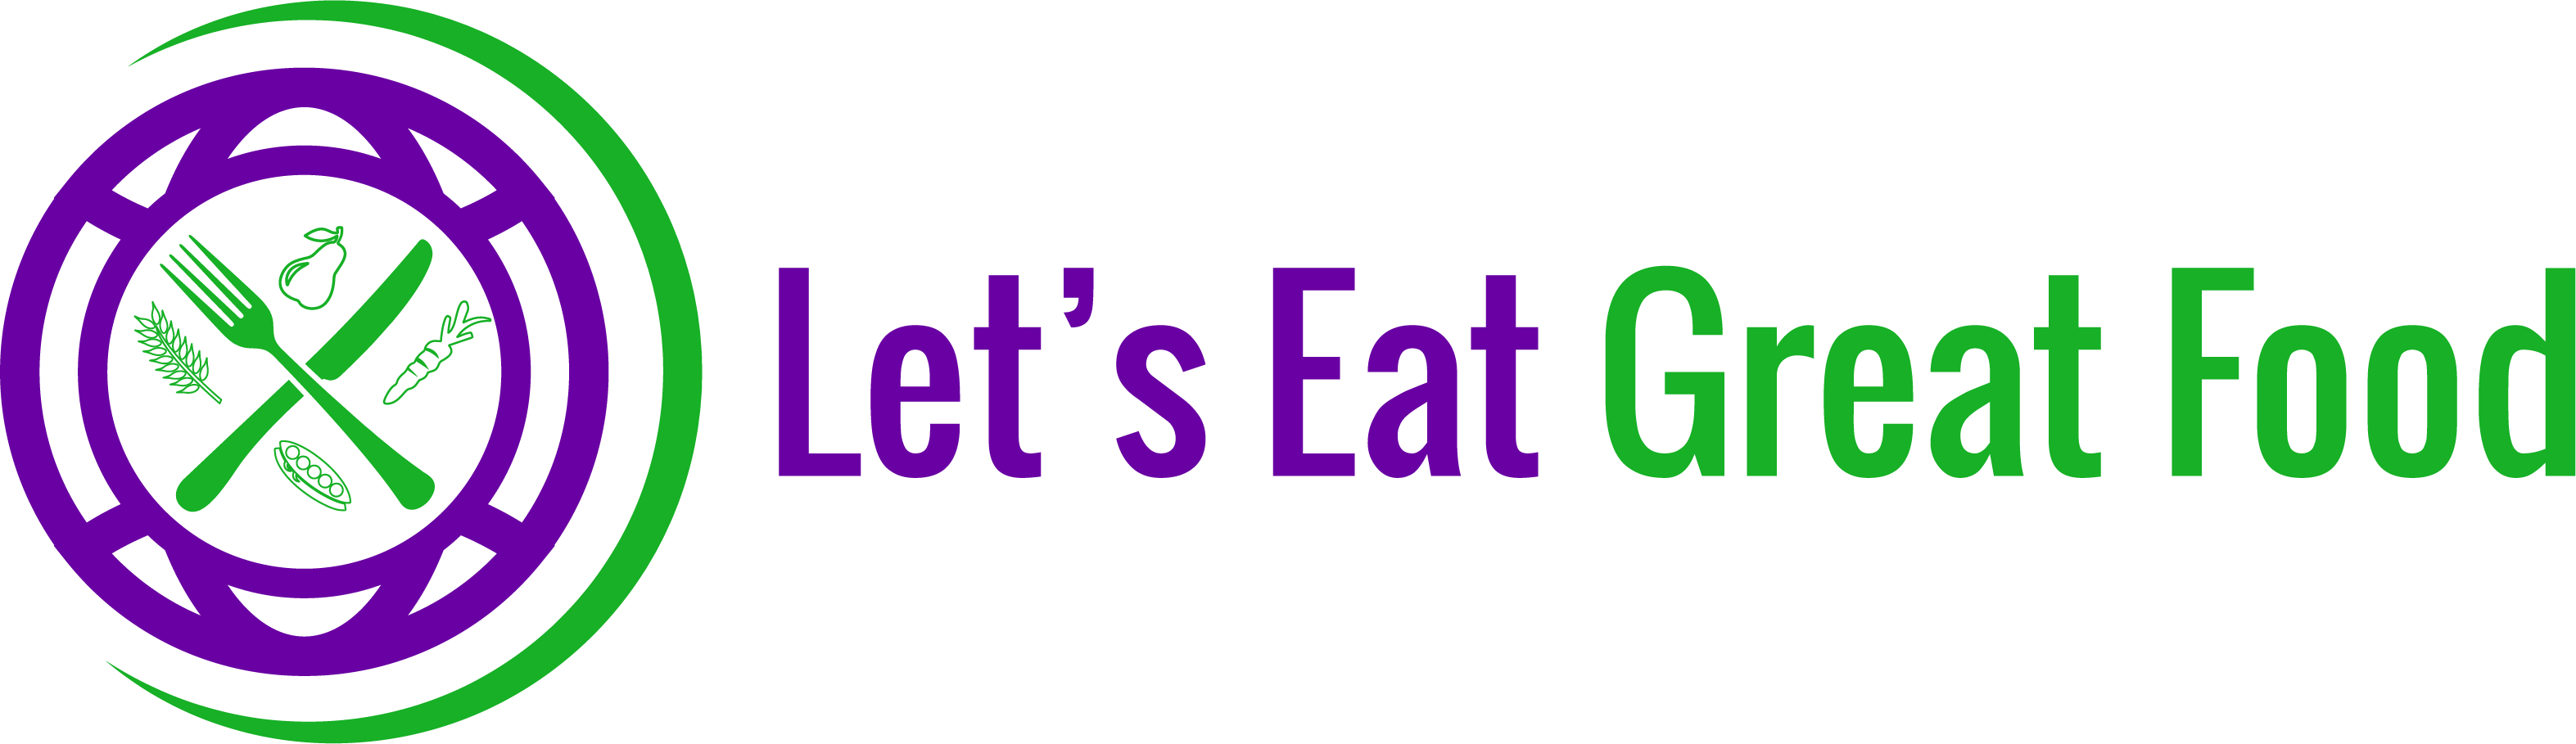 Let's eat great food logo